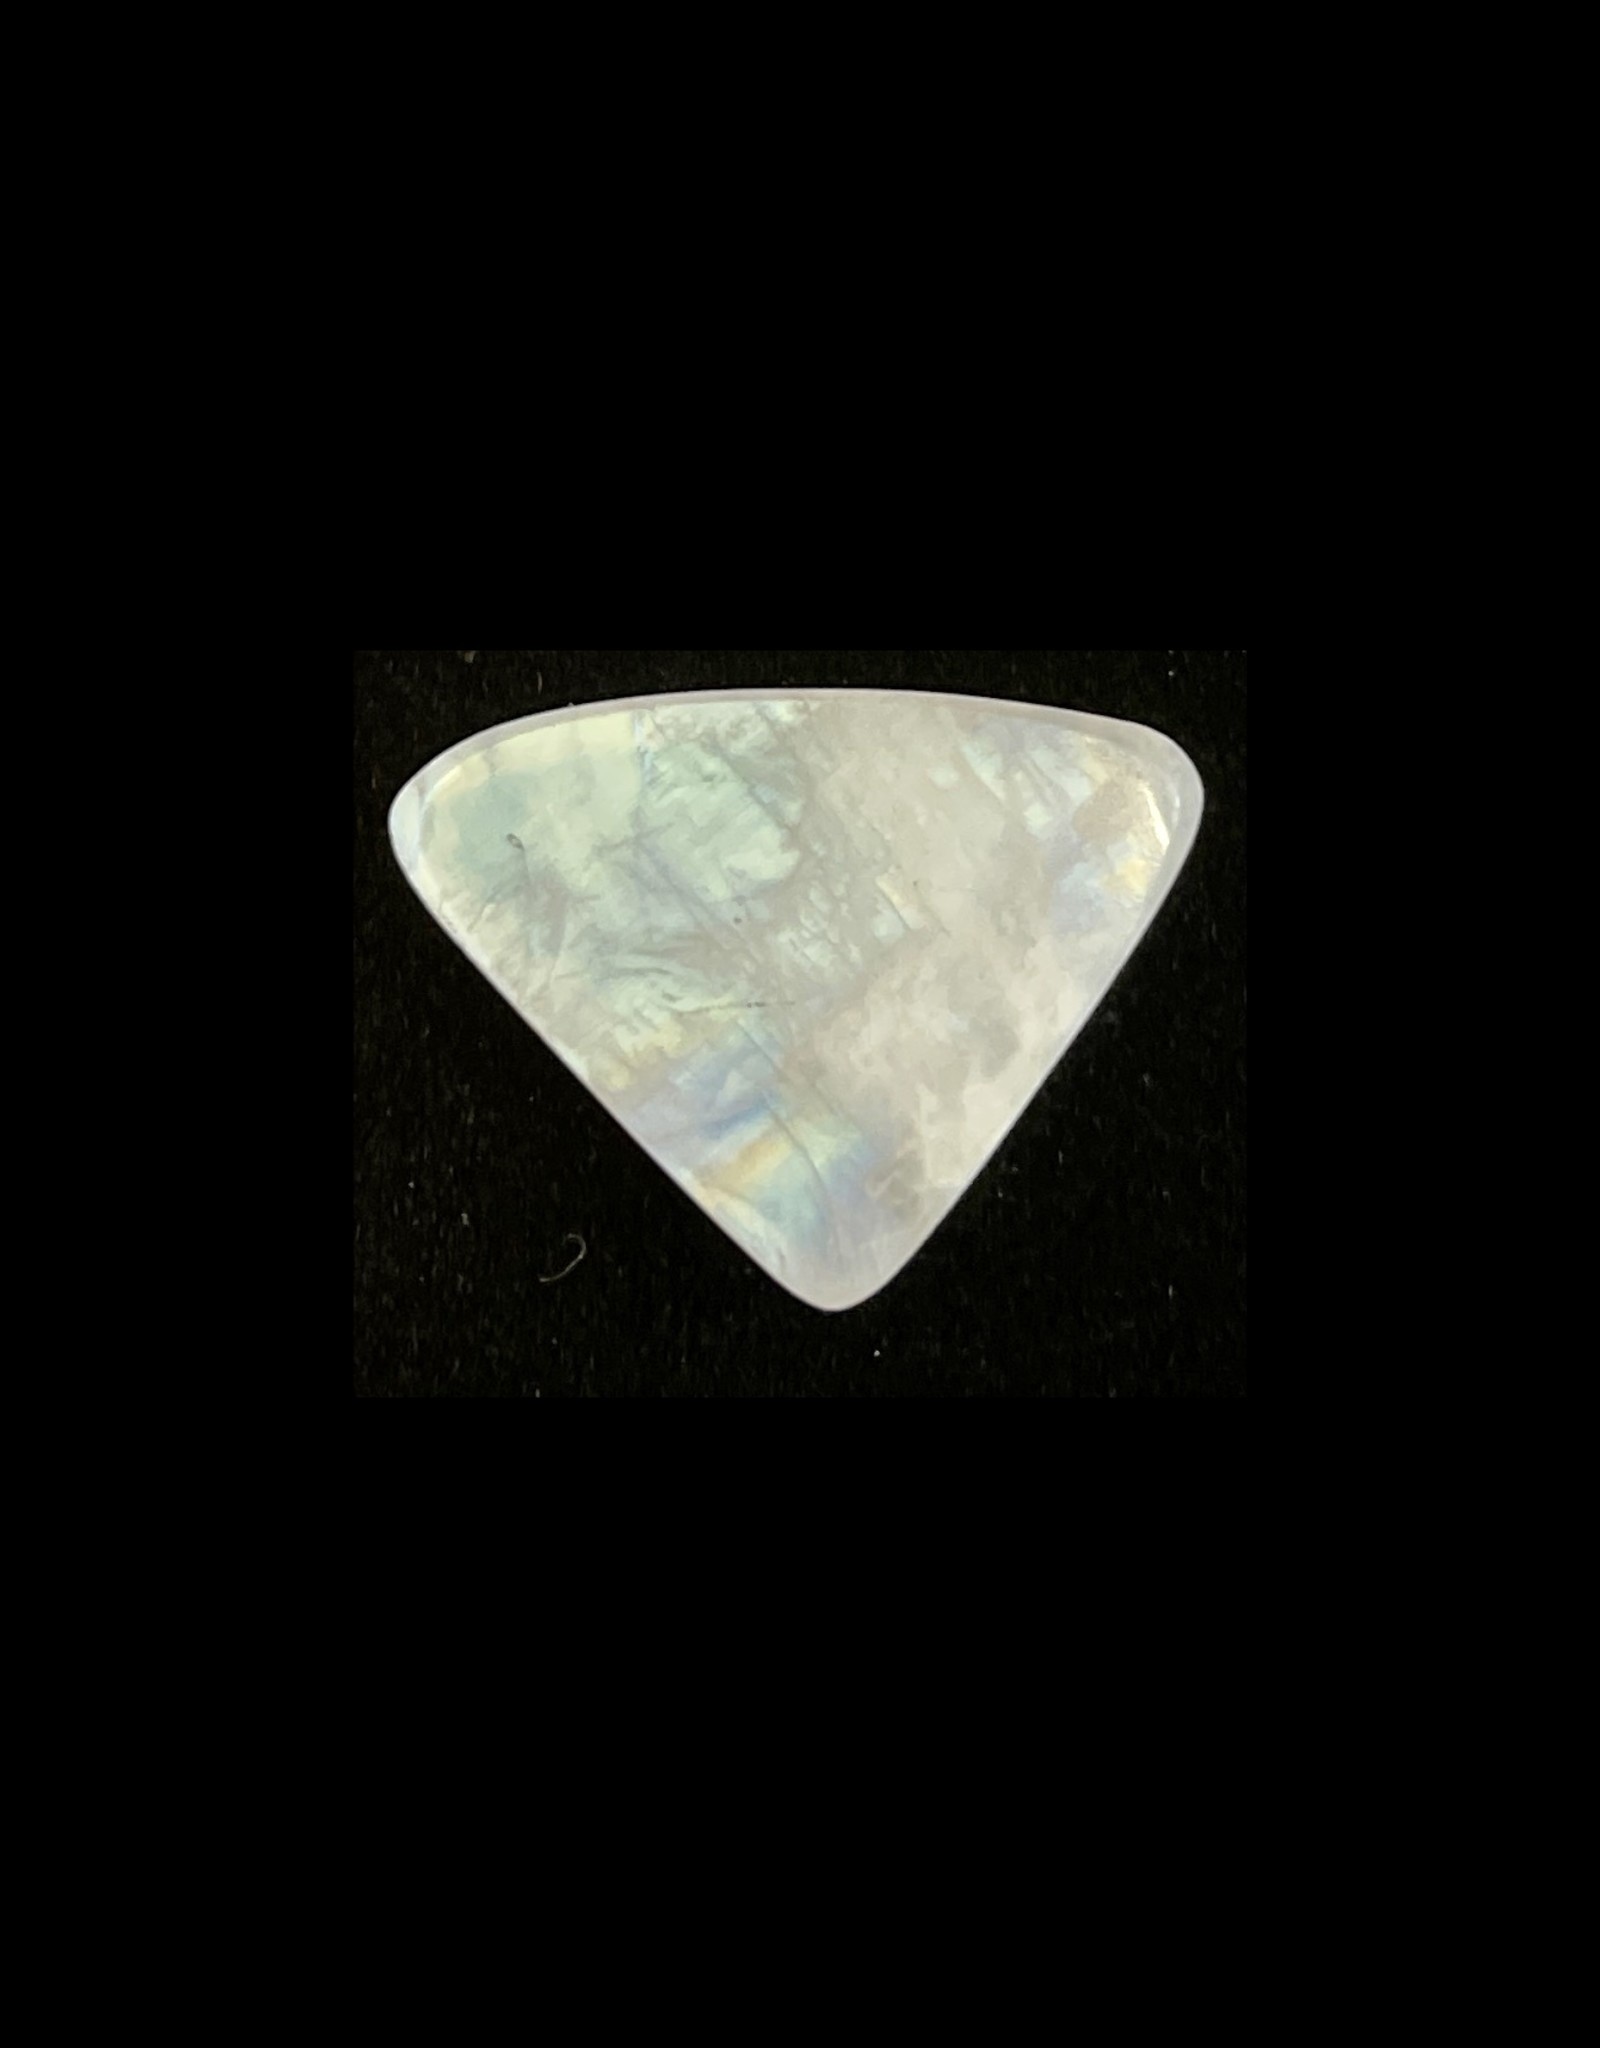 Crystals - Moon Stone